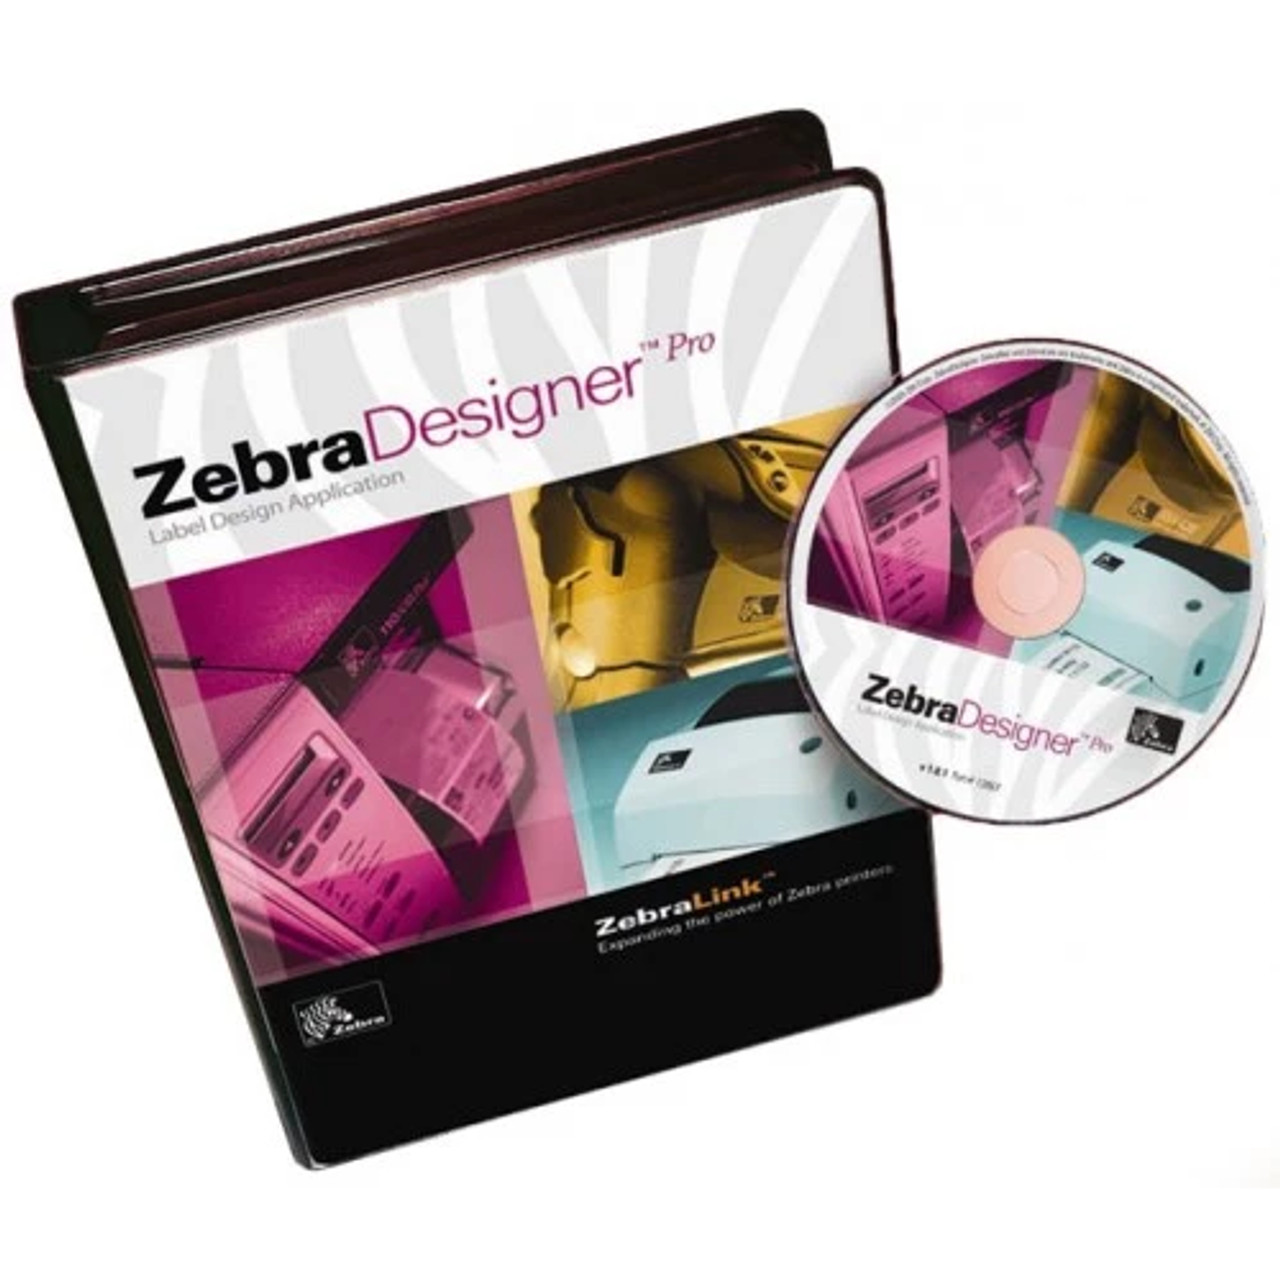 Zebra Designer Pro Software, V3